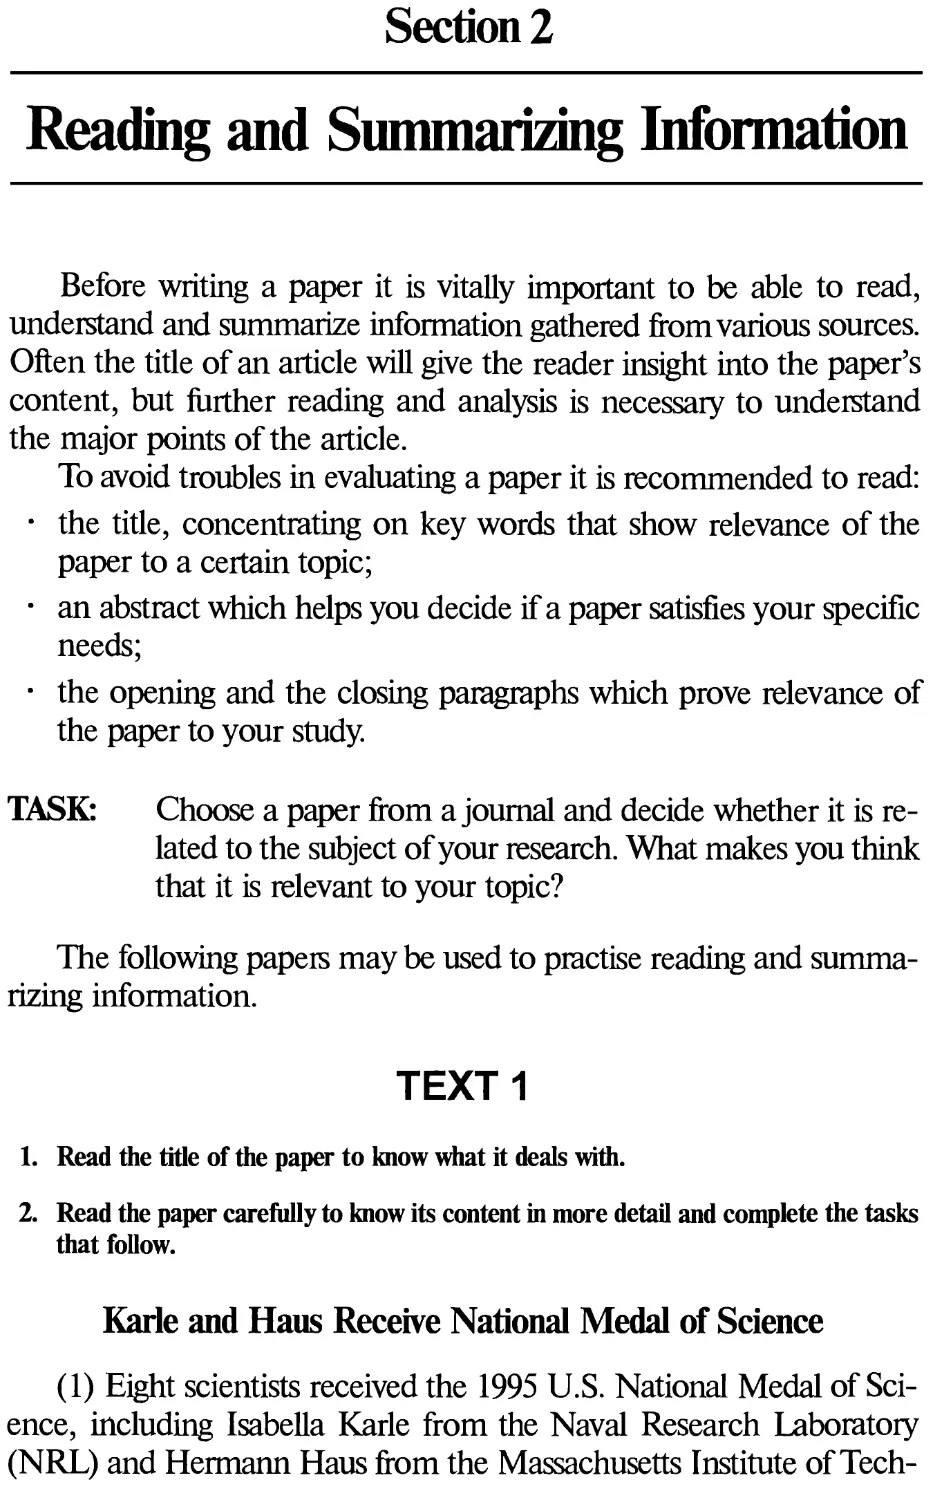 Section 2. Reading and Summarizing Information